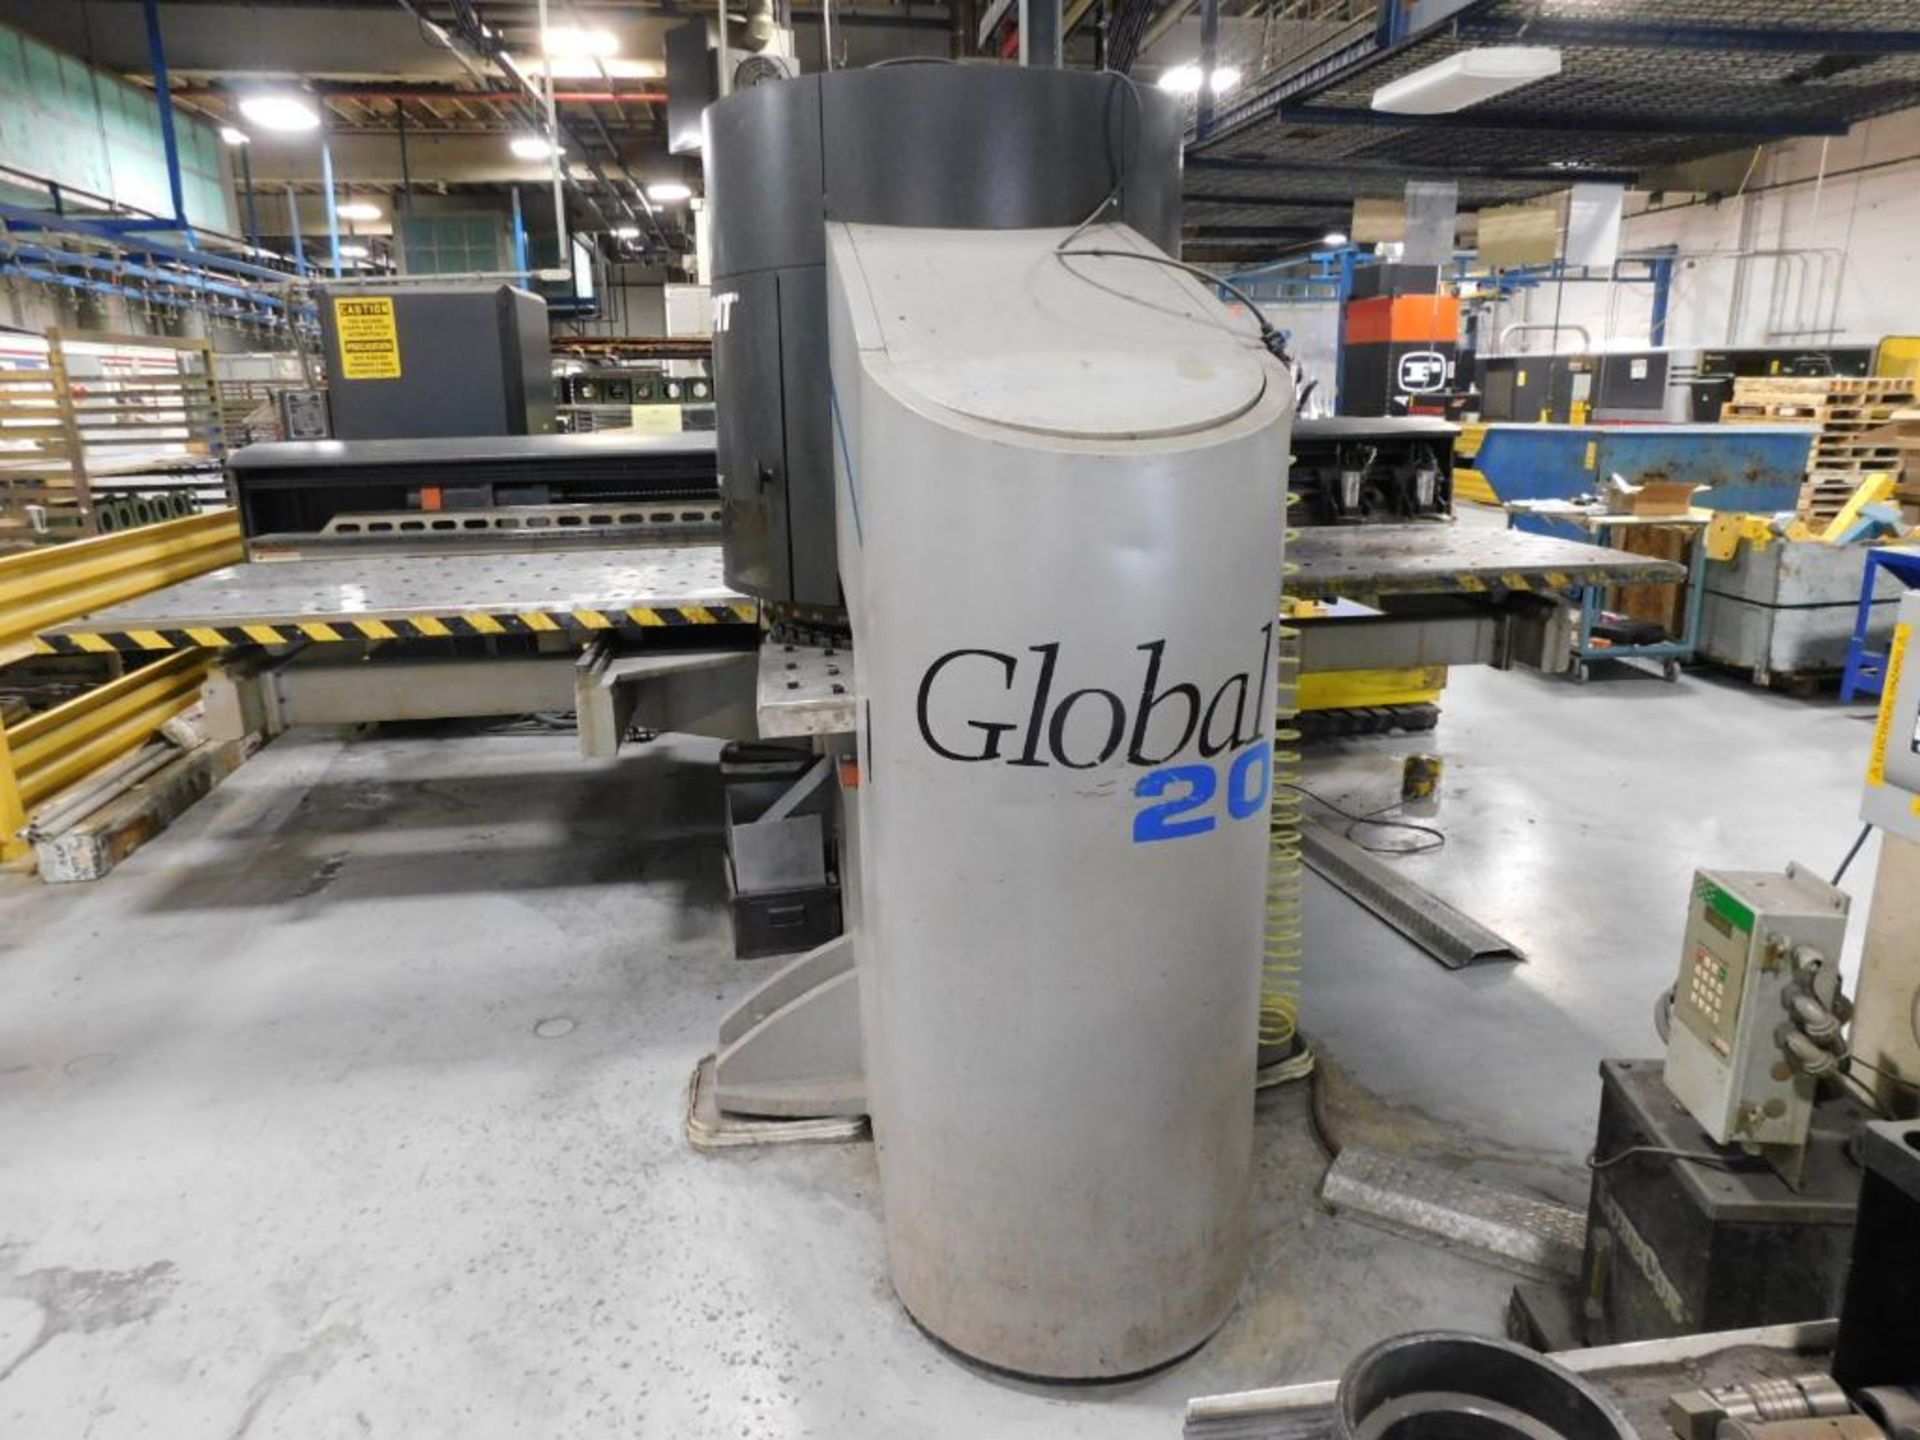 LVD Strippit Global 20 1225 CNC Turret Punch Press, Fanuc 180i-P CNC, 22 Ton, 50" x 98" Travel, .25" - Image 5 of 13